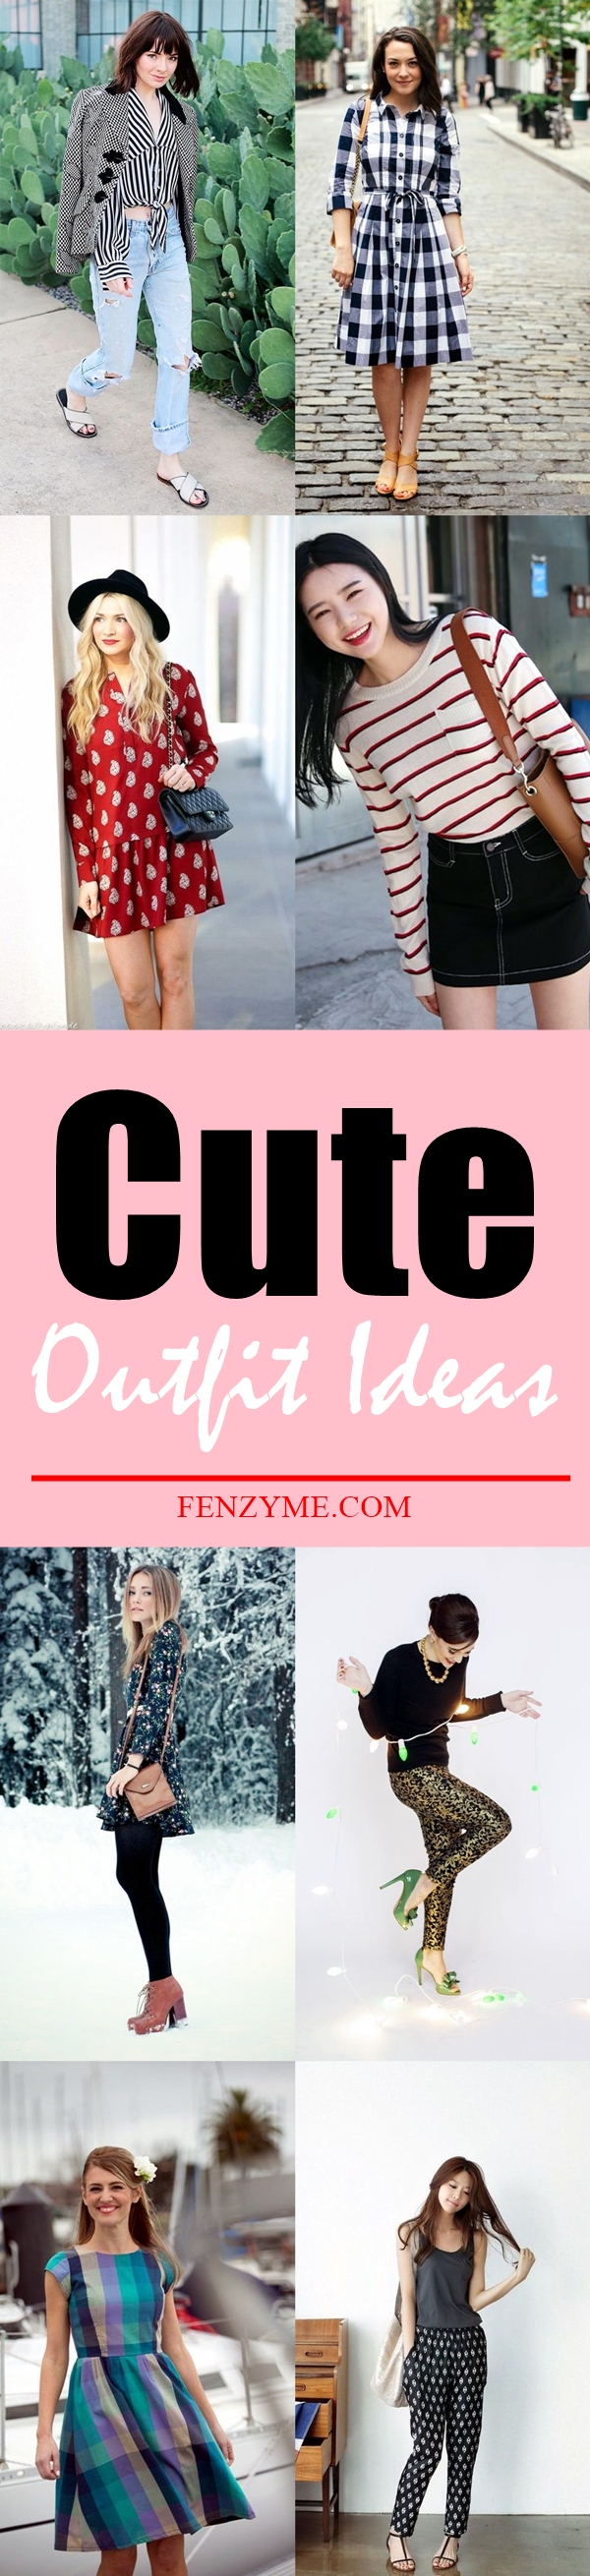 cute-outfit-ideas-1-tile